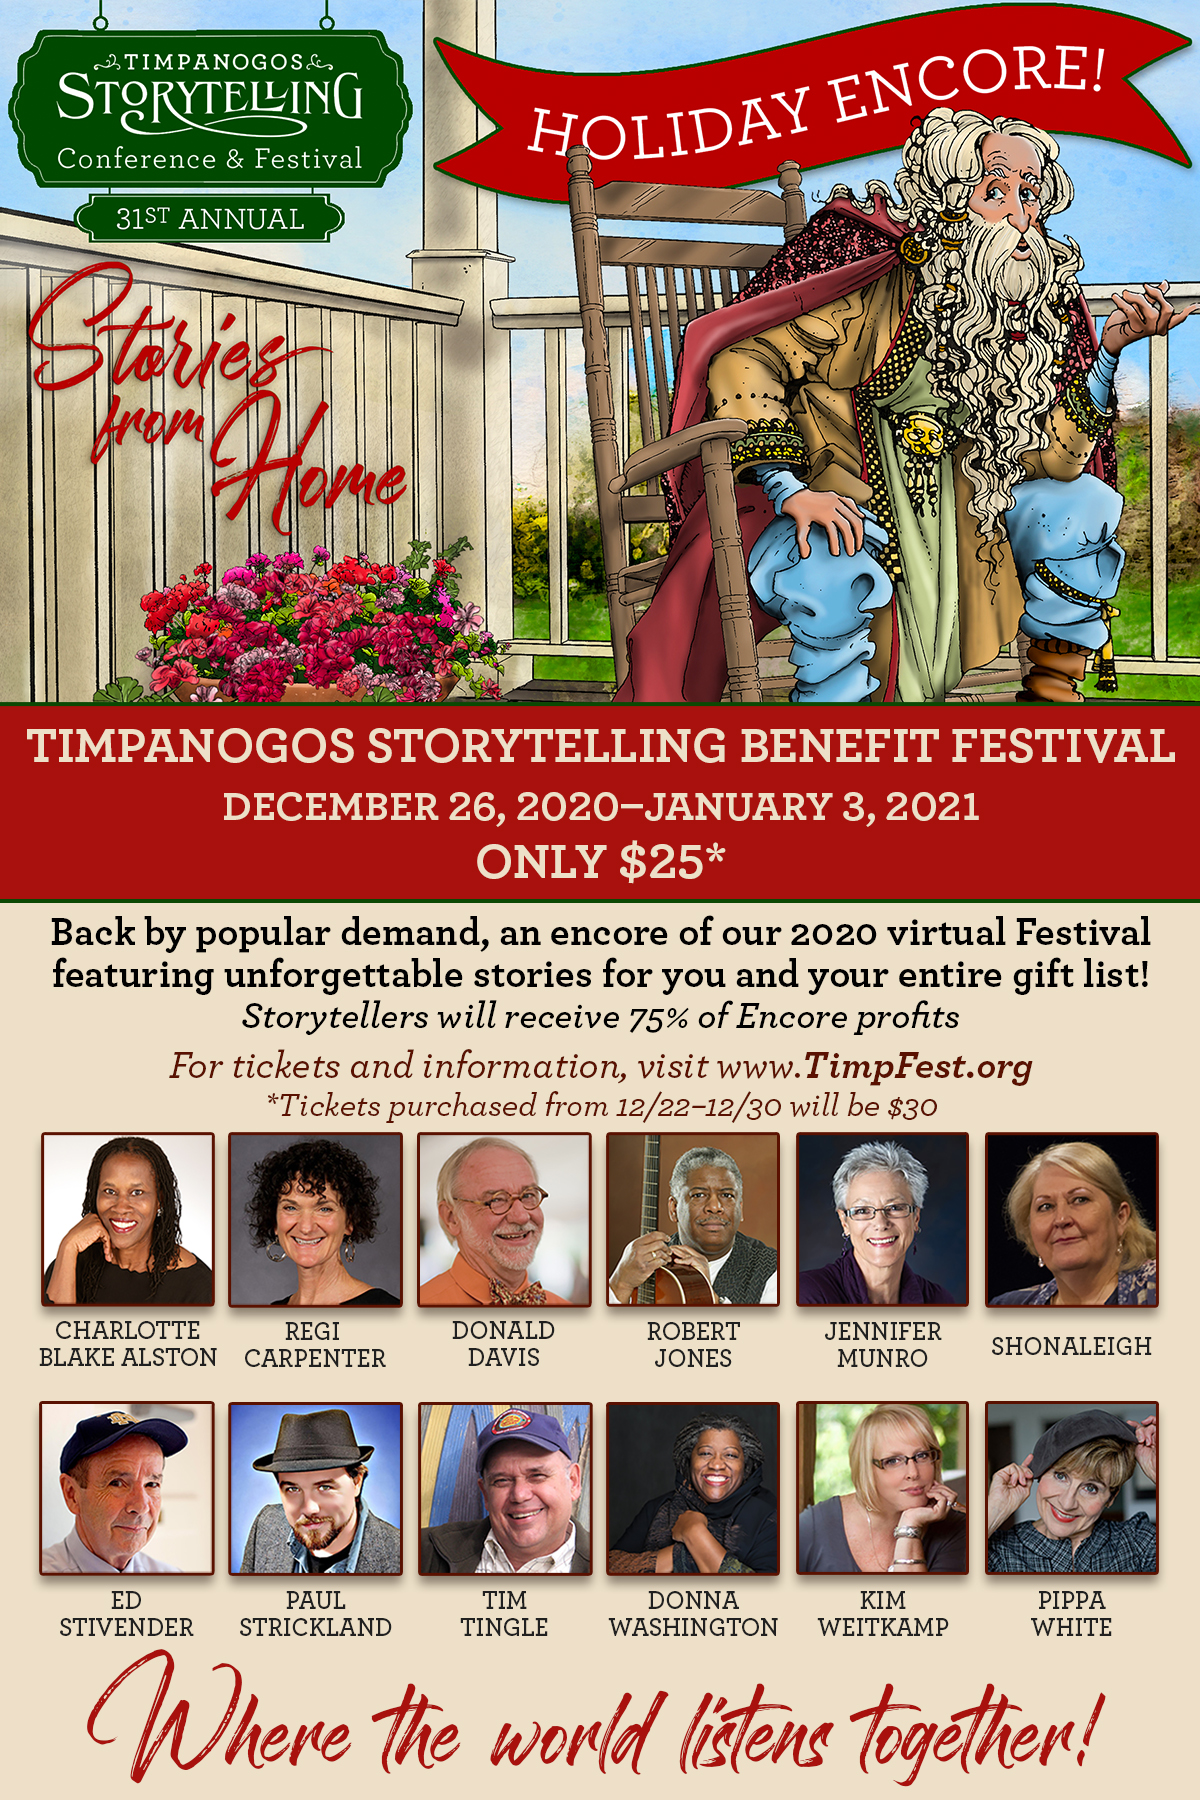 Timpanogos Storytelling Institute